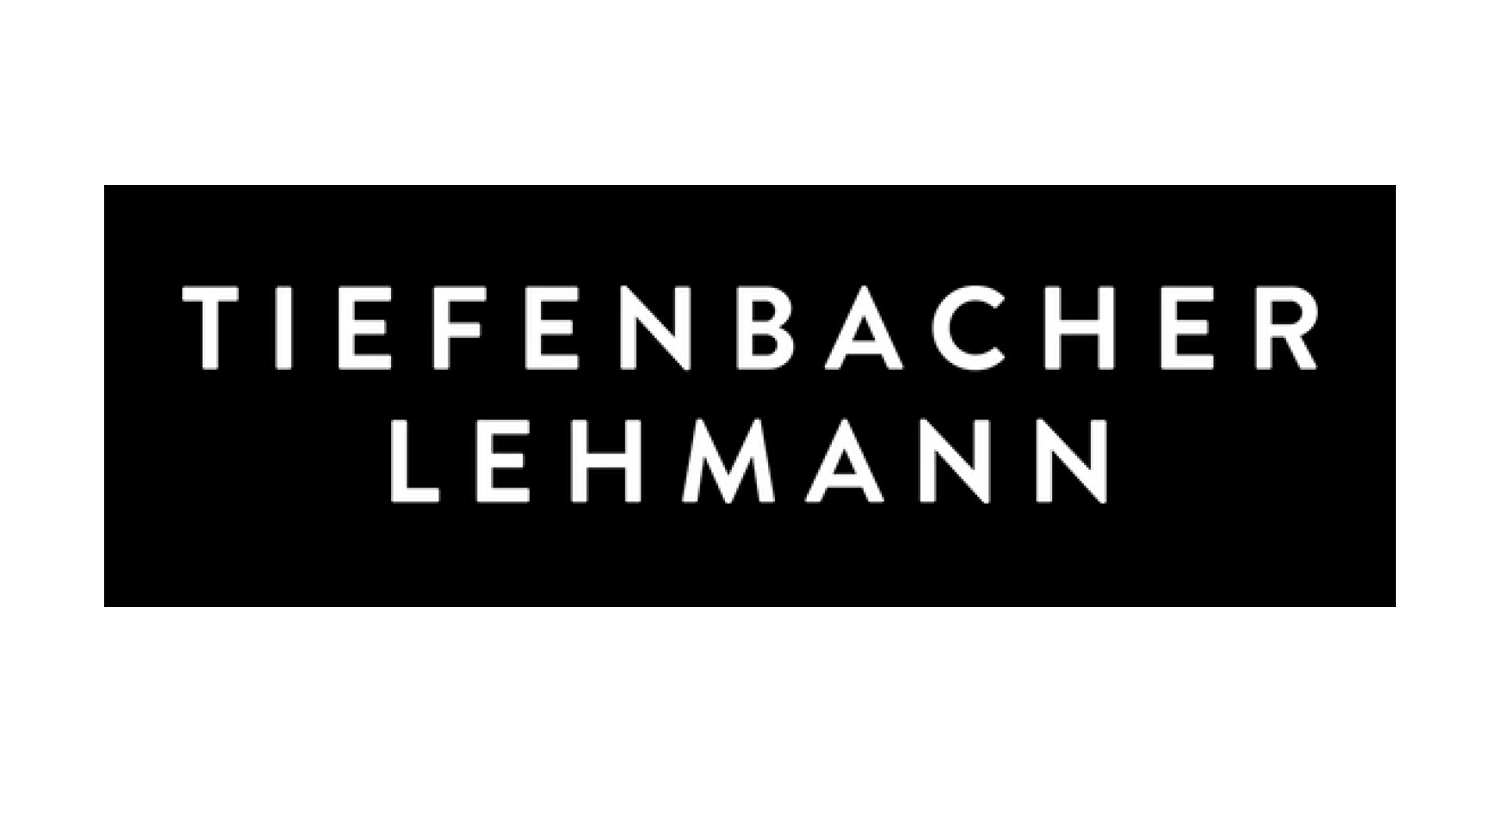 Tiefenbacher Lehmann